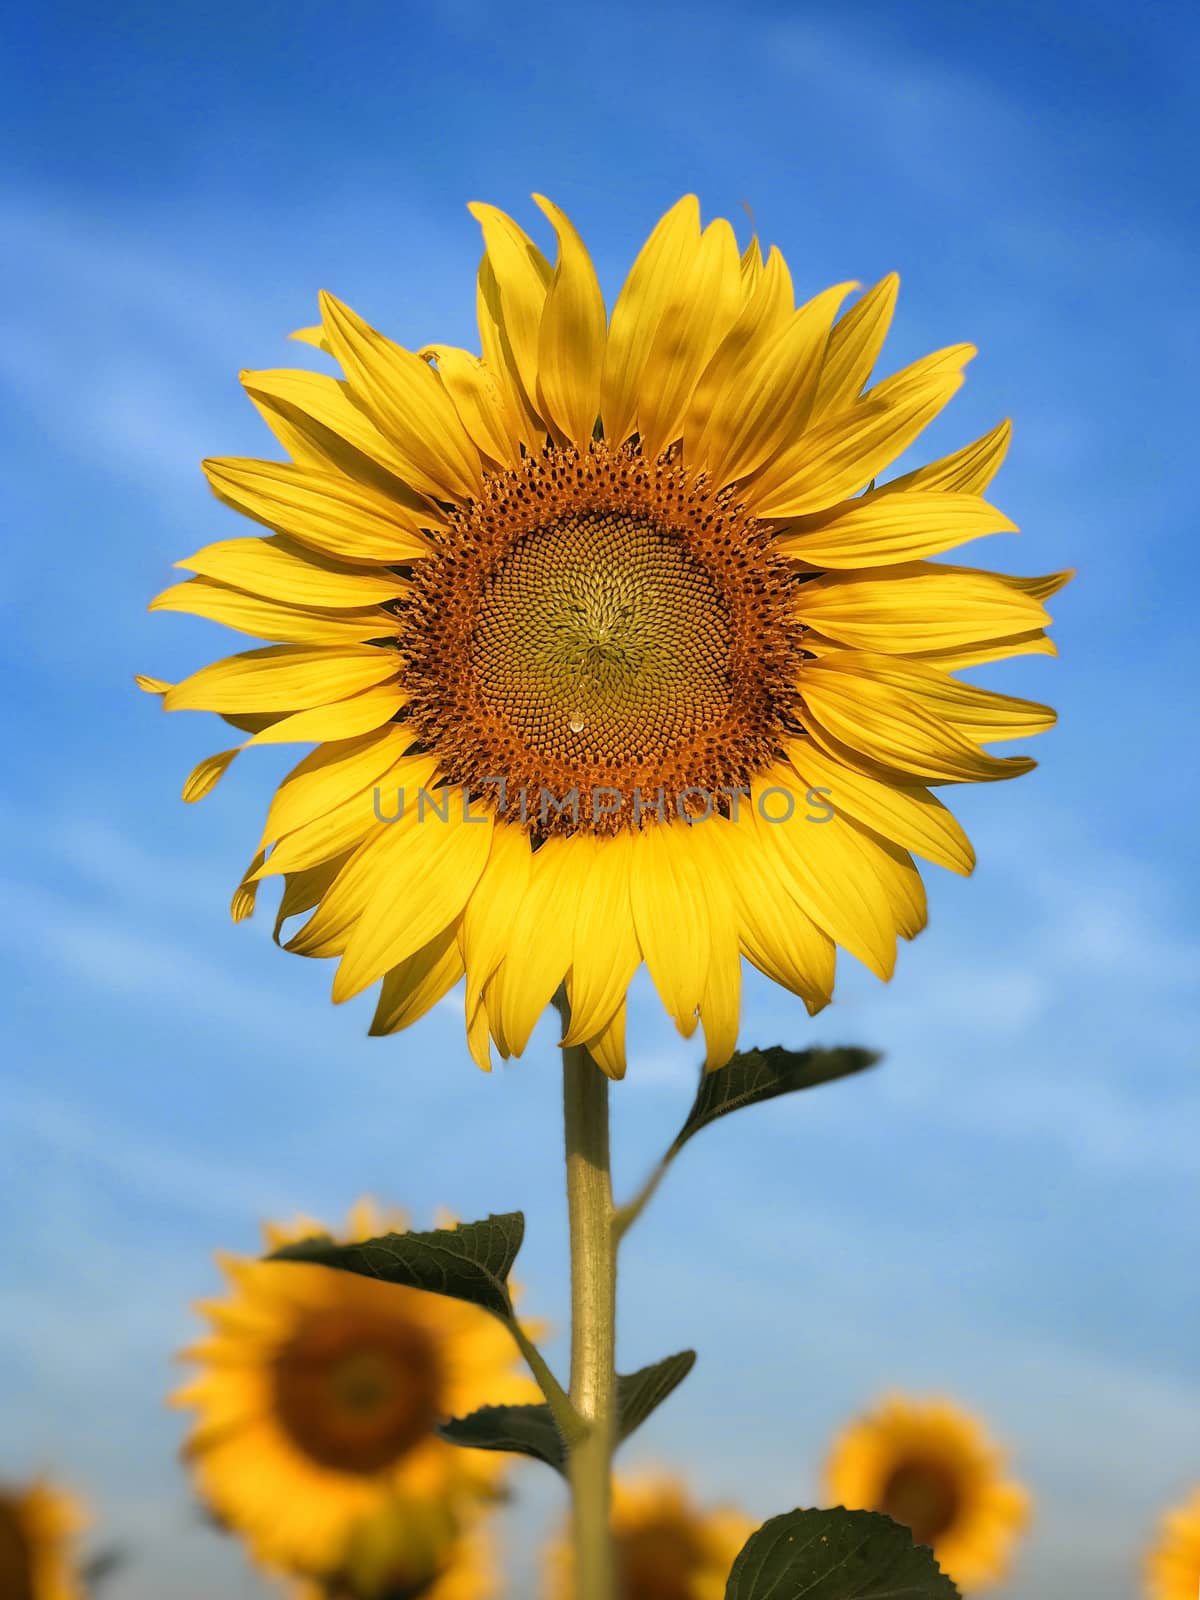 Big sunflower in the field and blue sky in sunrise by Surasak